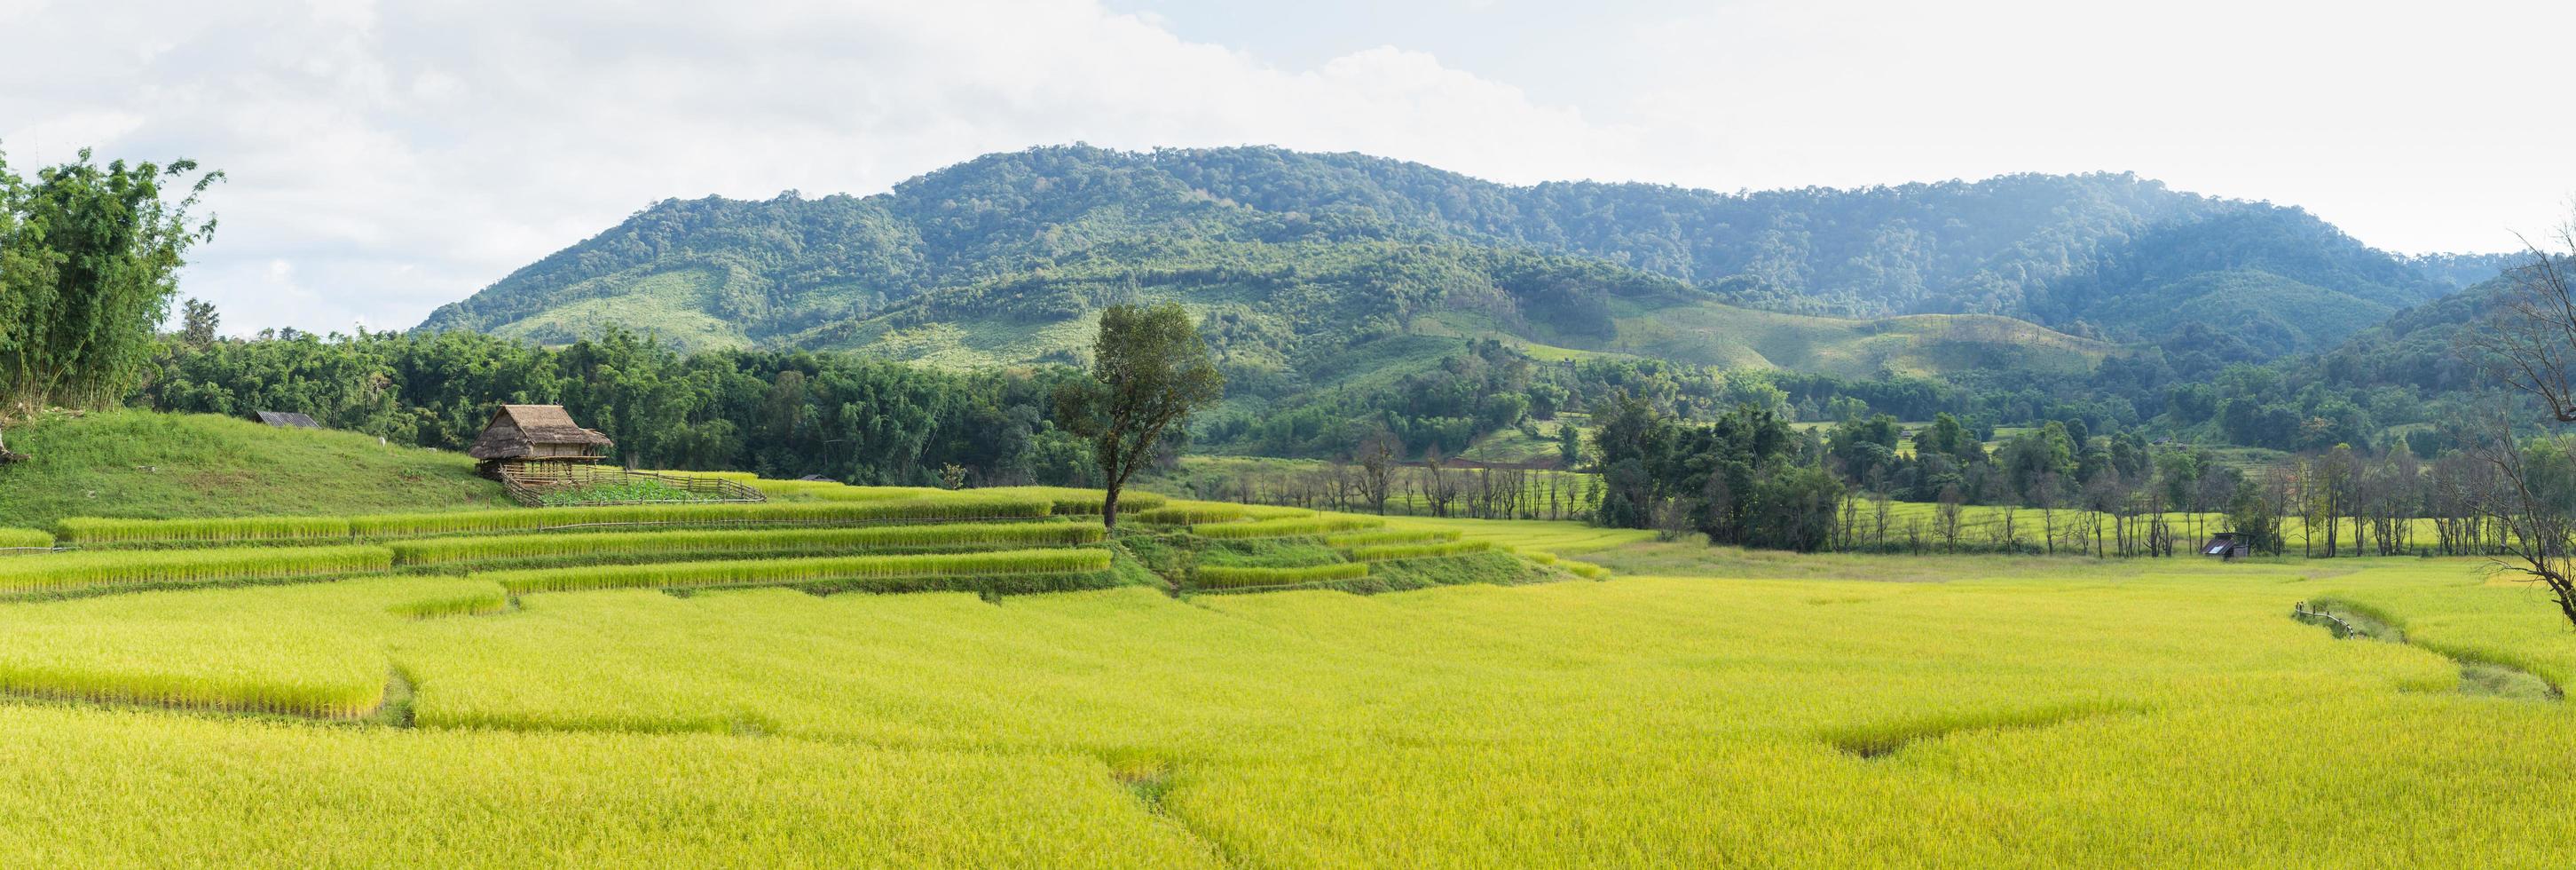 rijstveld en berg foto